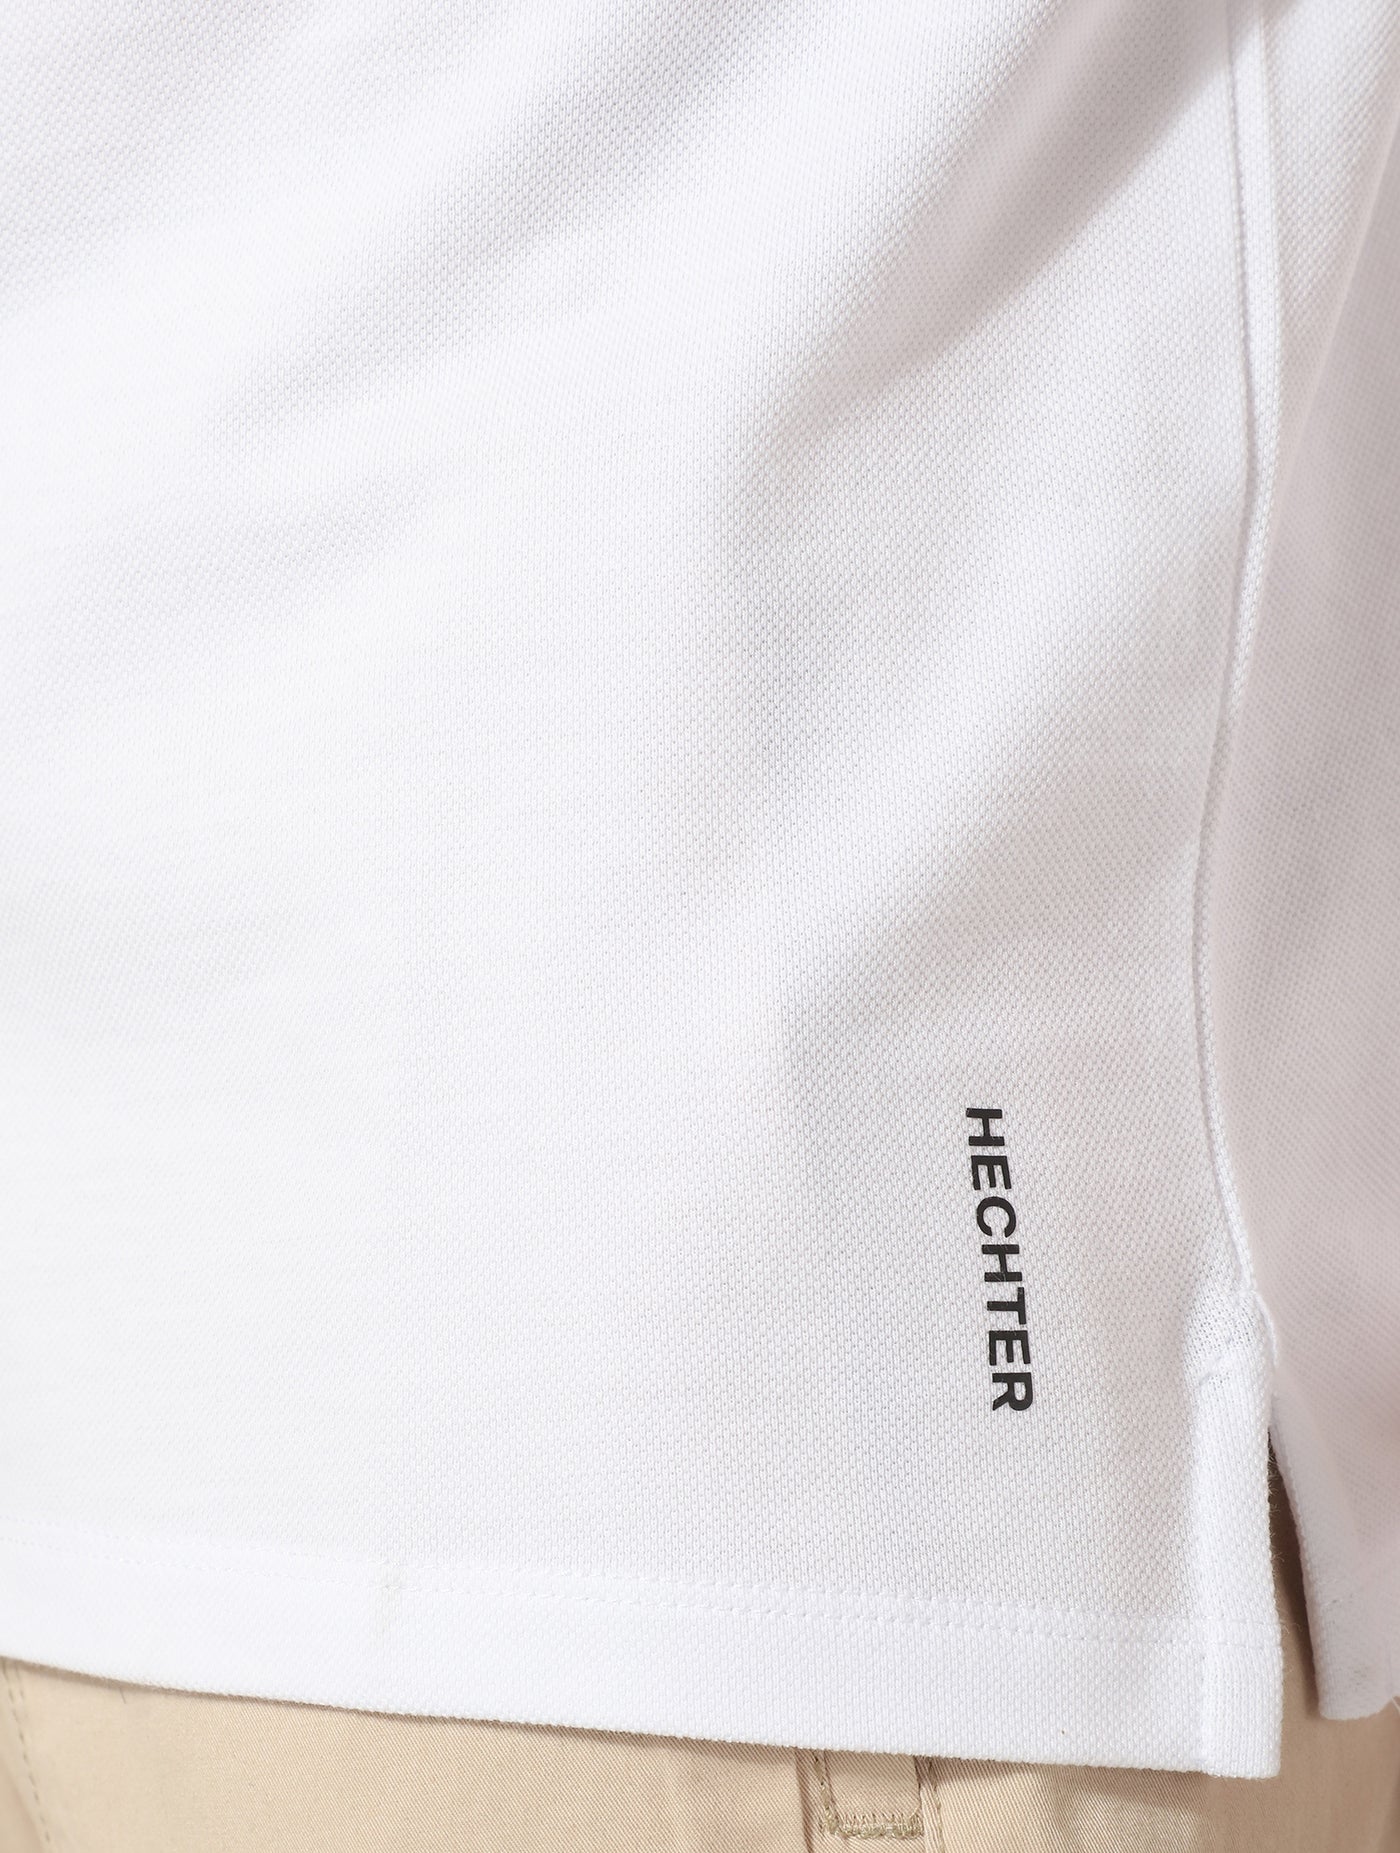 Polo Shirt - Half Sleeves - Contrast Stripes